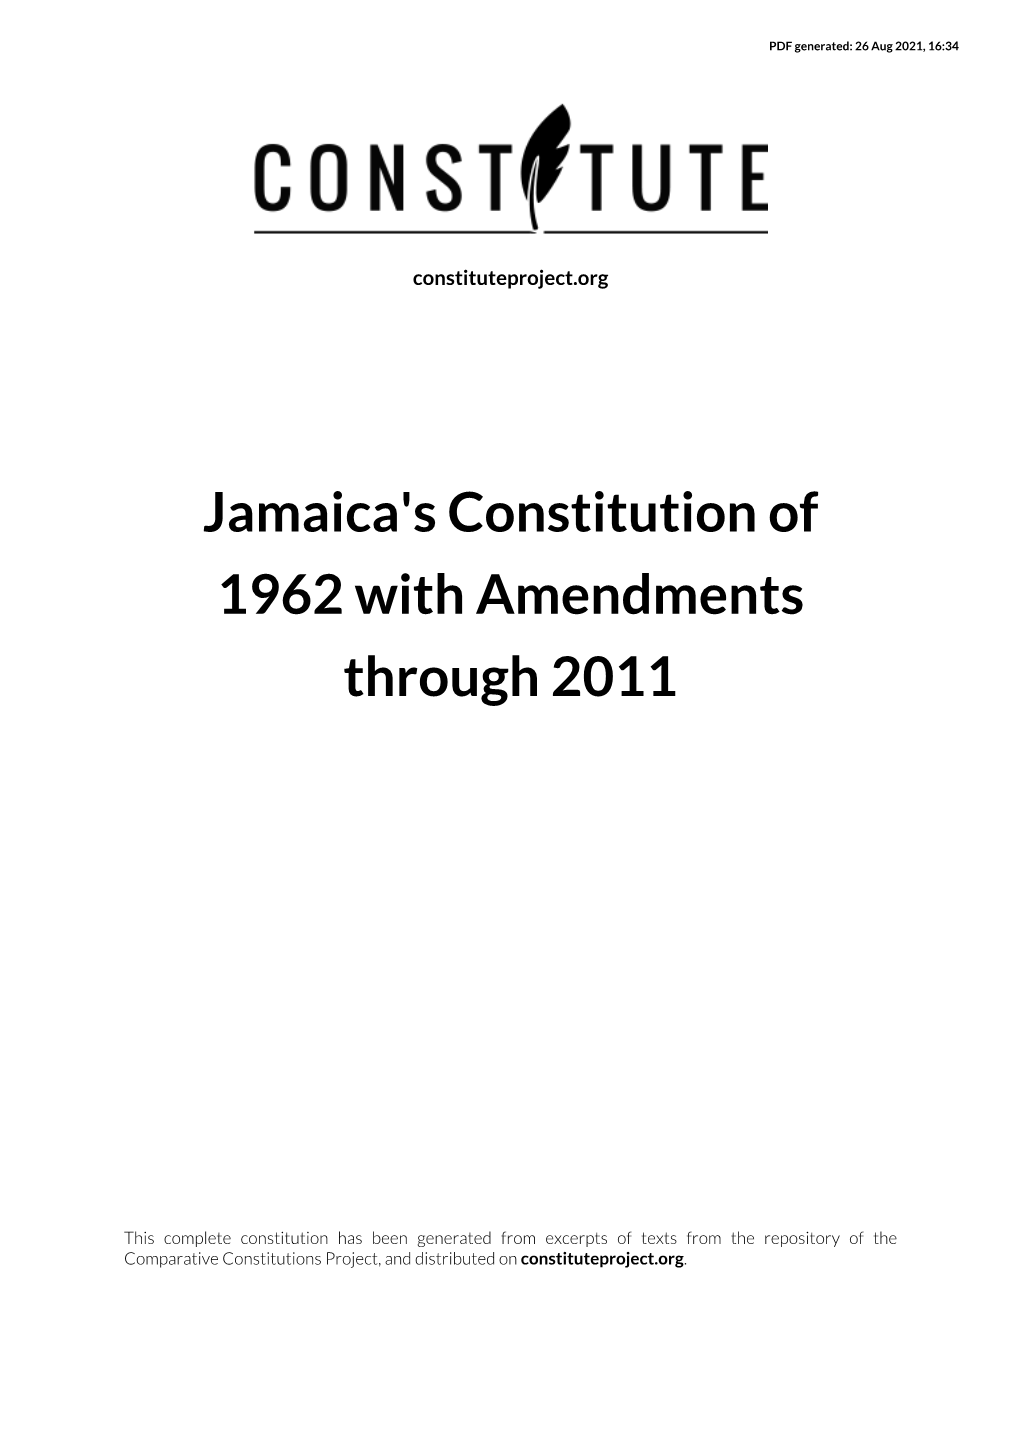 Jamaica's Constitution of 1962 with Amendments Through 2011